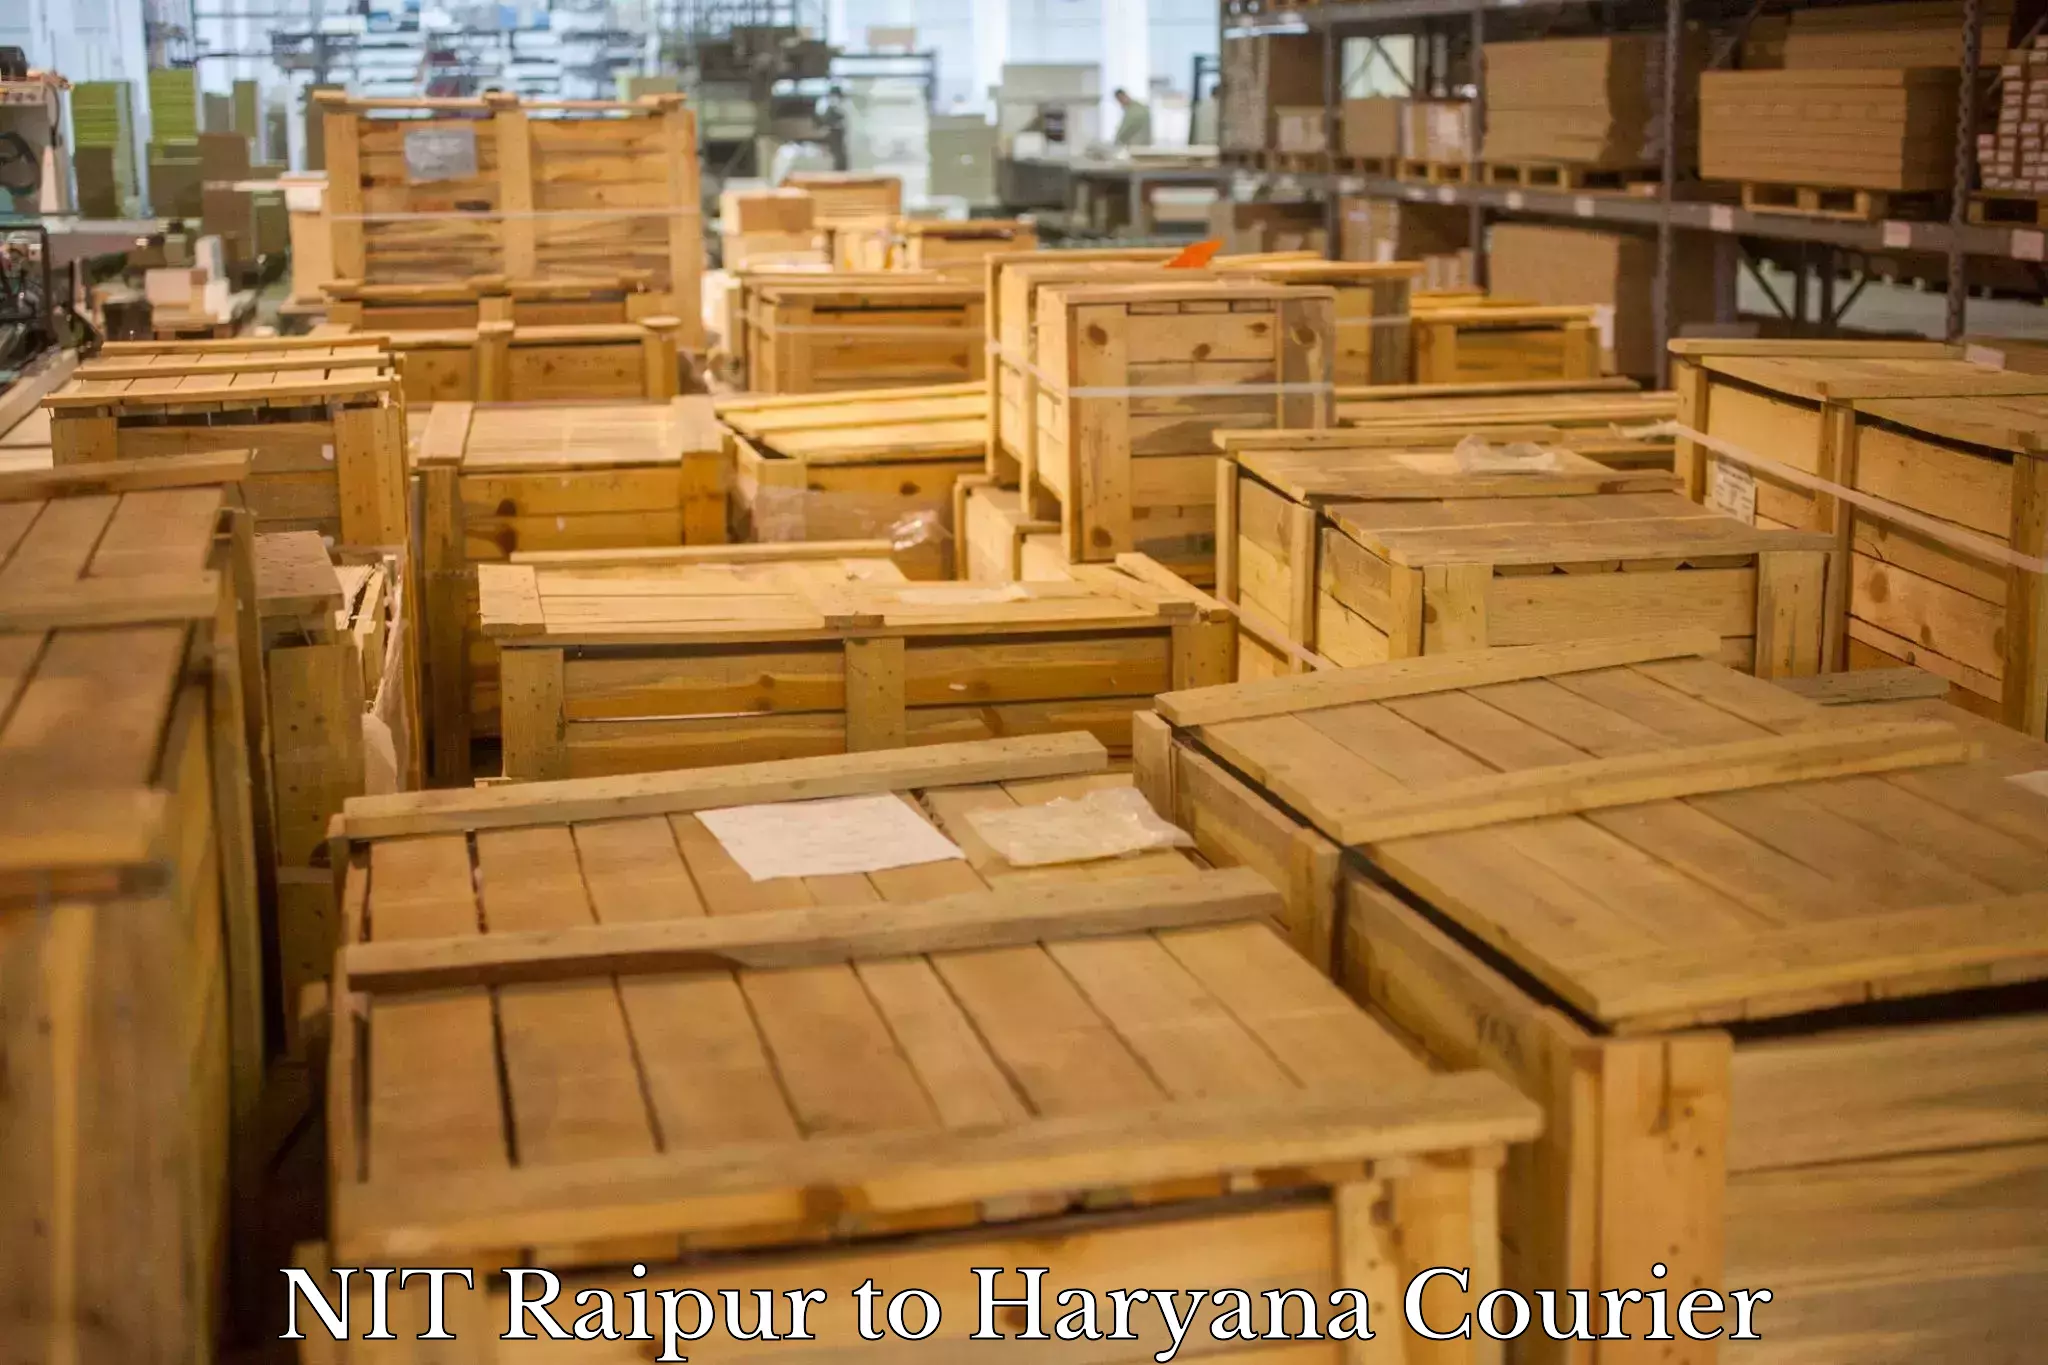 High-performance logistics NIT Raipur to Hansi